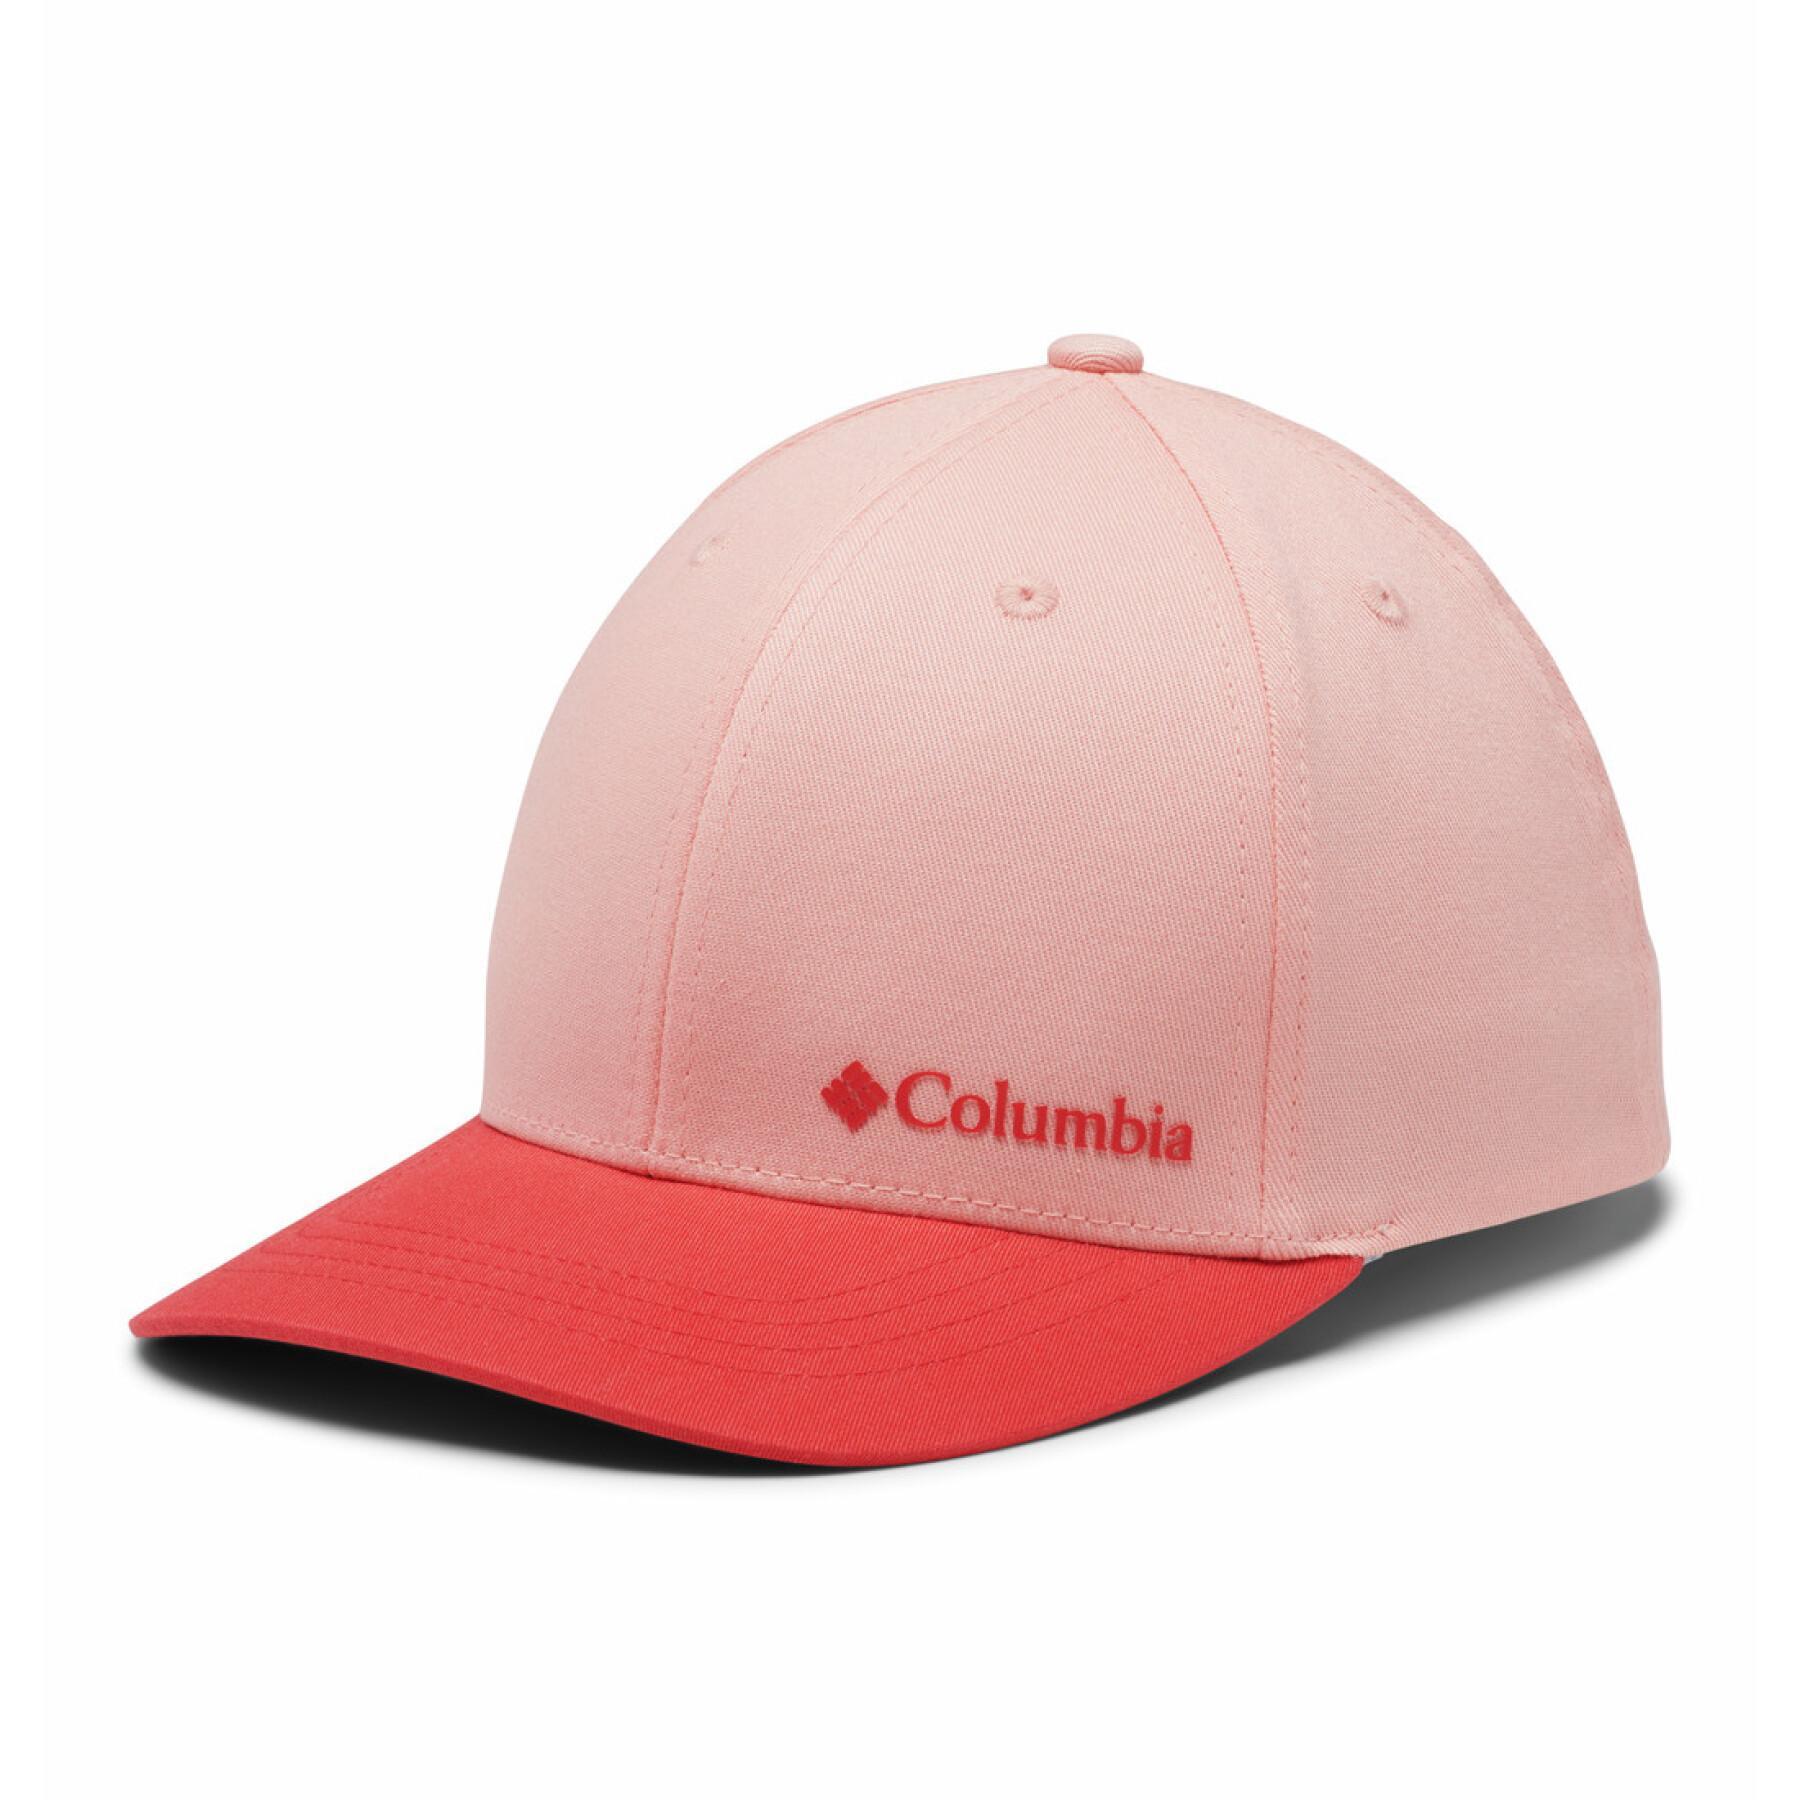 Gorra para niños Columbia Columbia Trek - Gorras - Accesorios